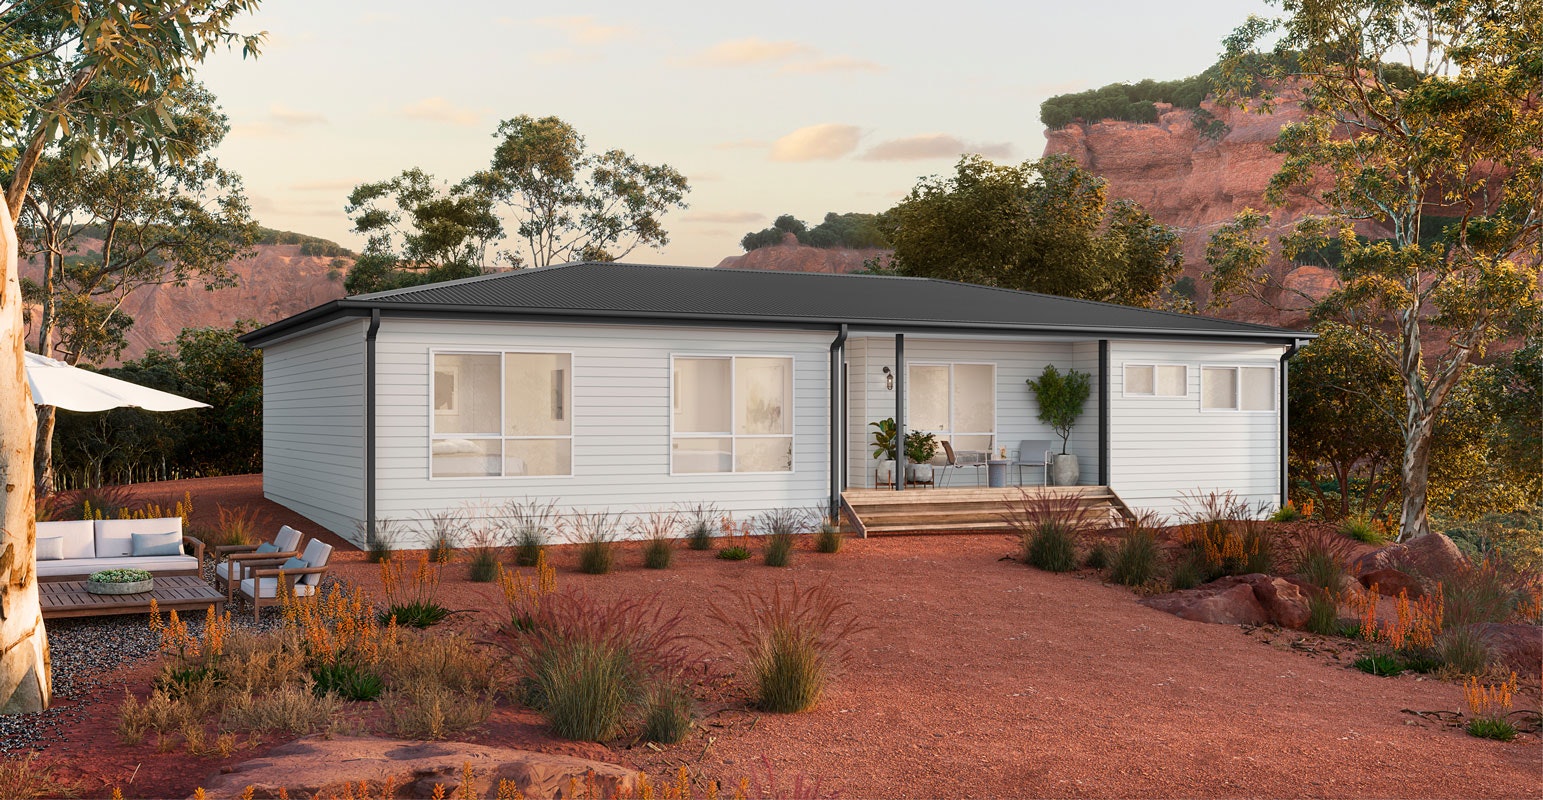 Flinders – Ranch Style 3 to 4 Bedroom Home Design